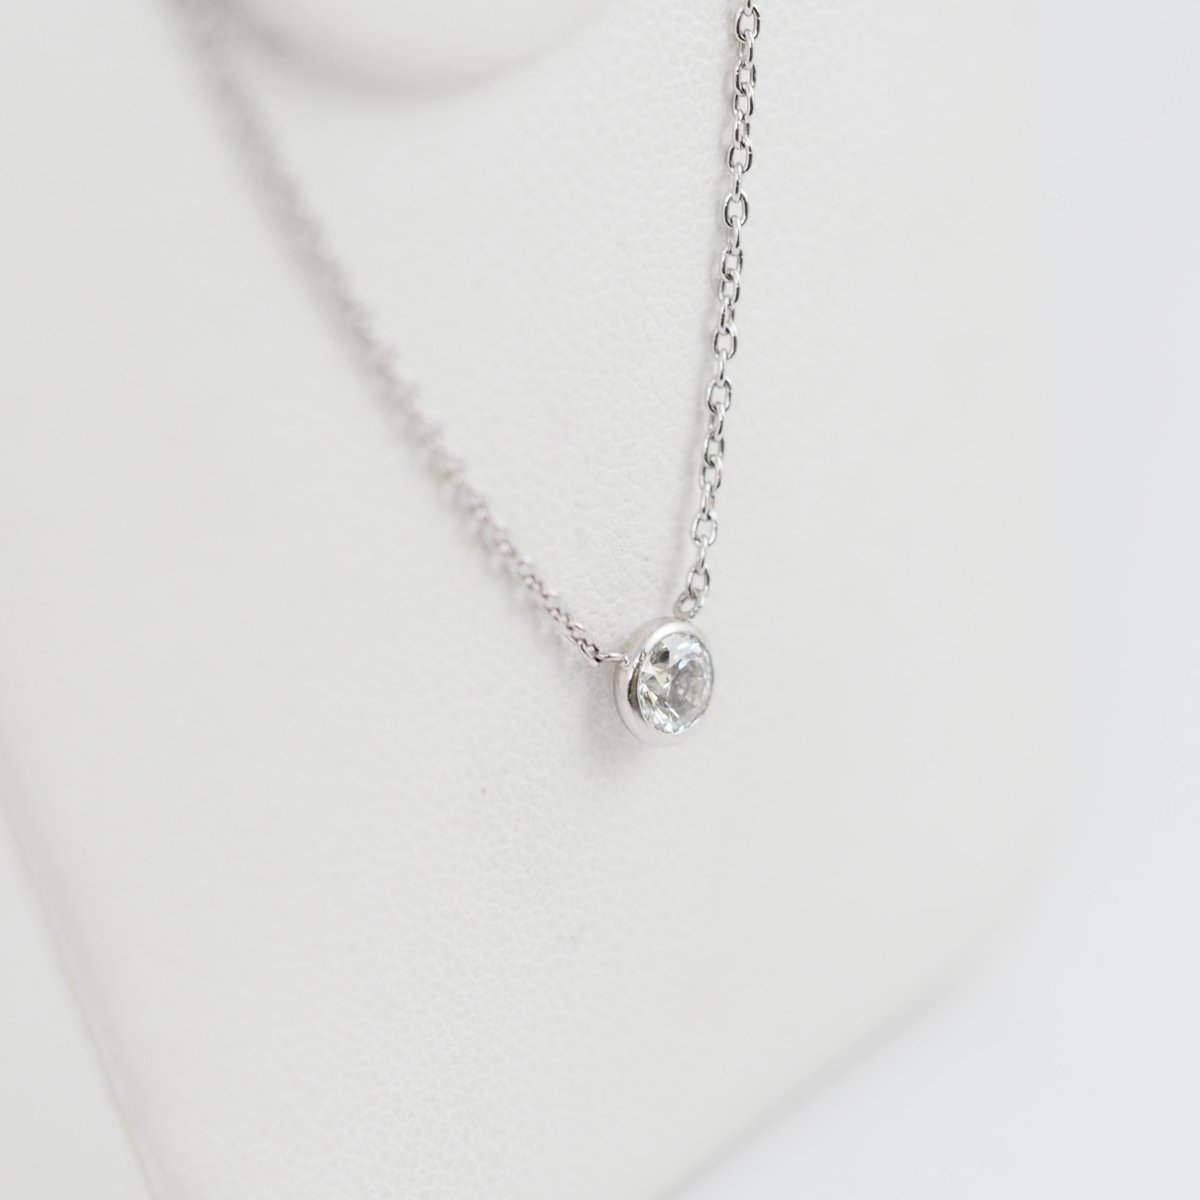 VENDOME AOYAMA Pt900/850 1 diamond 0.27ct necklace with case 